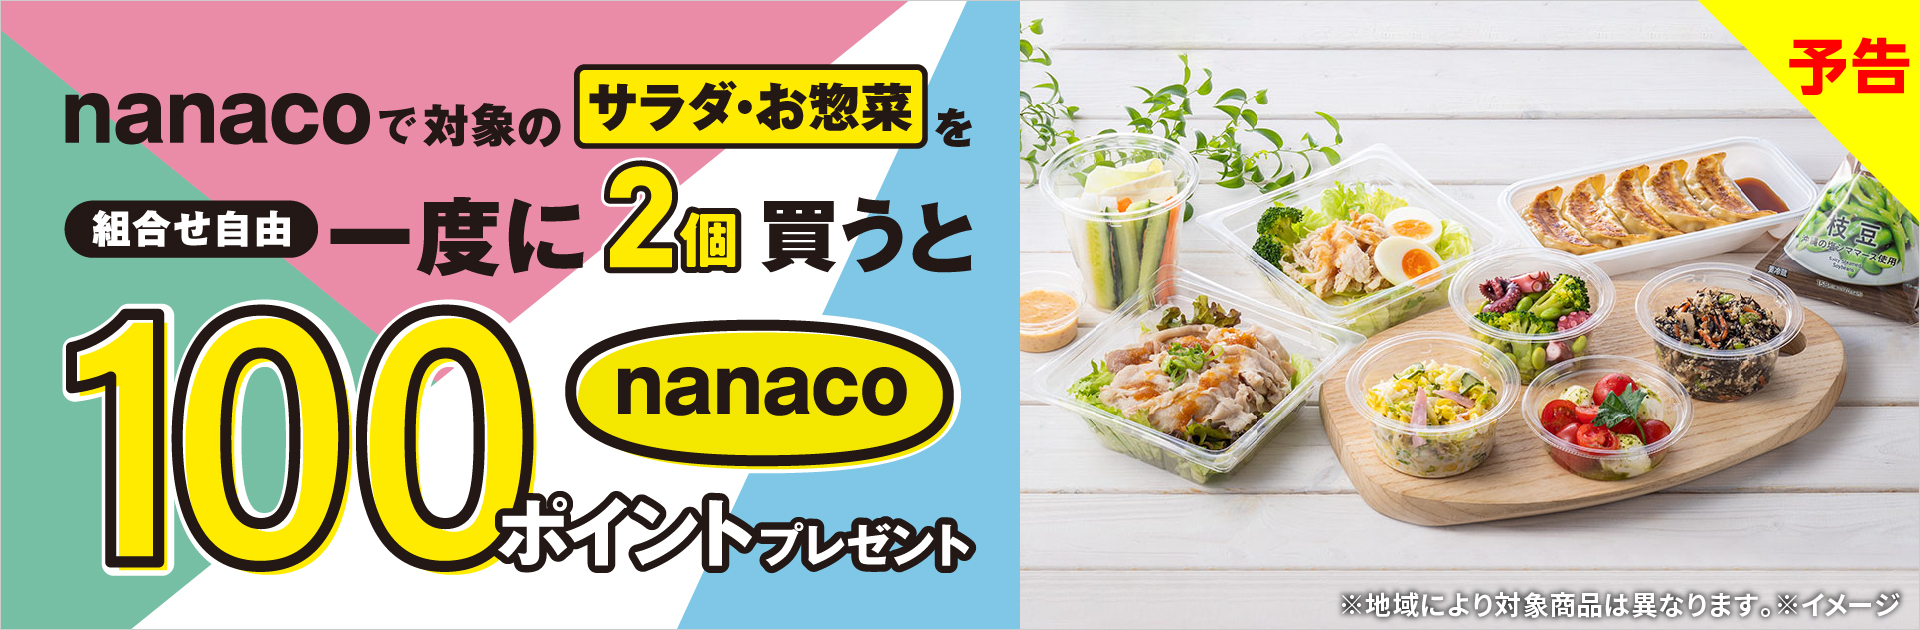 nanacoで対象のサラダ・お惣菜を一度に2個買うと100nanacoポイントプレゼント